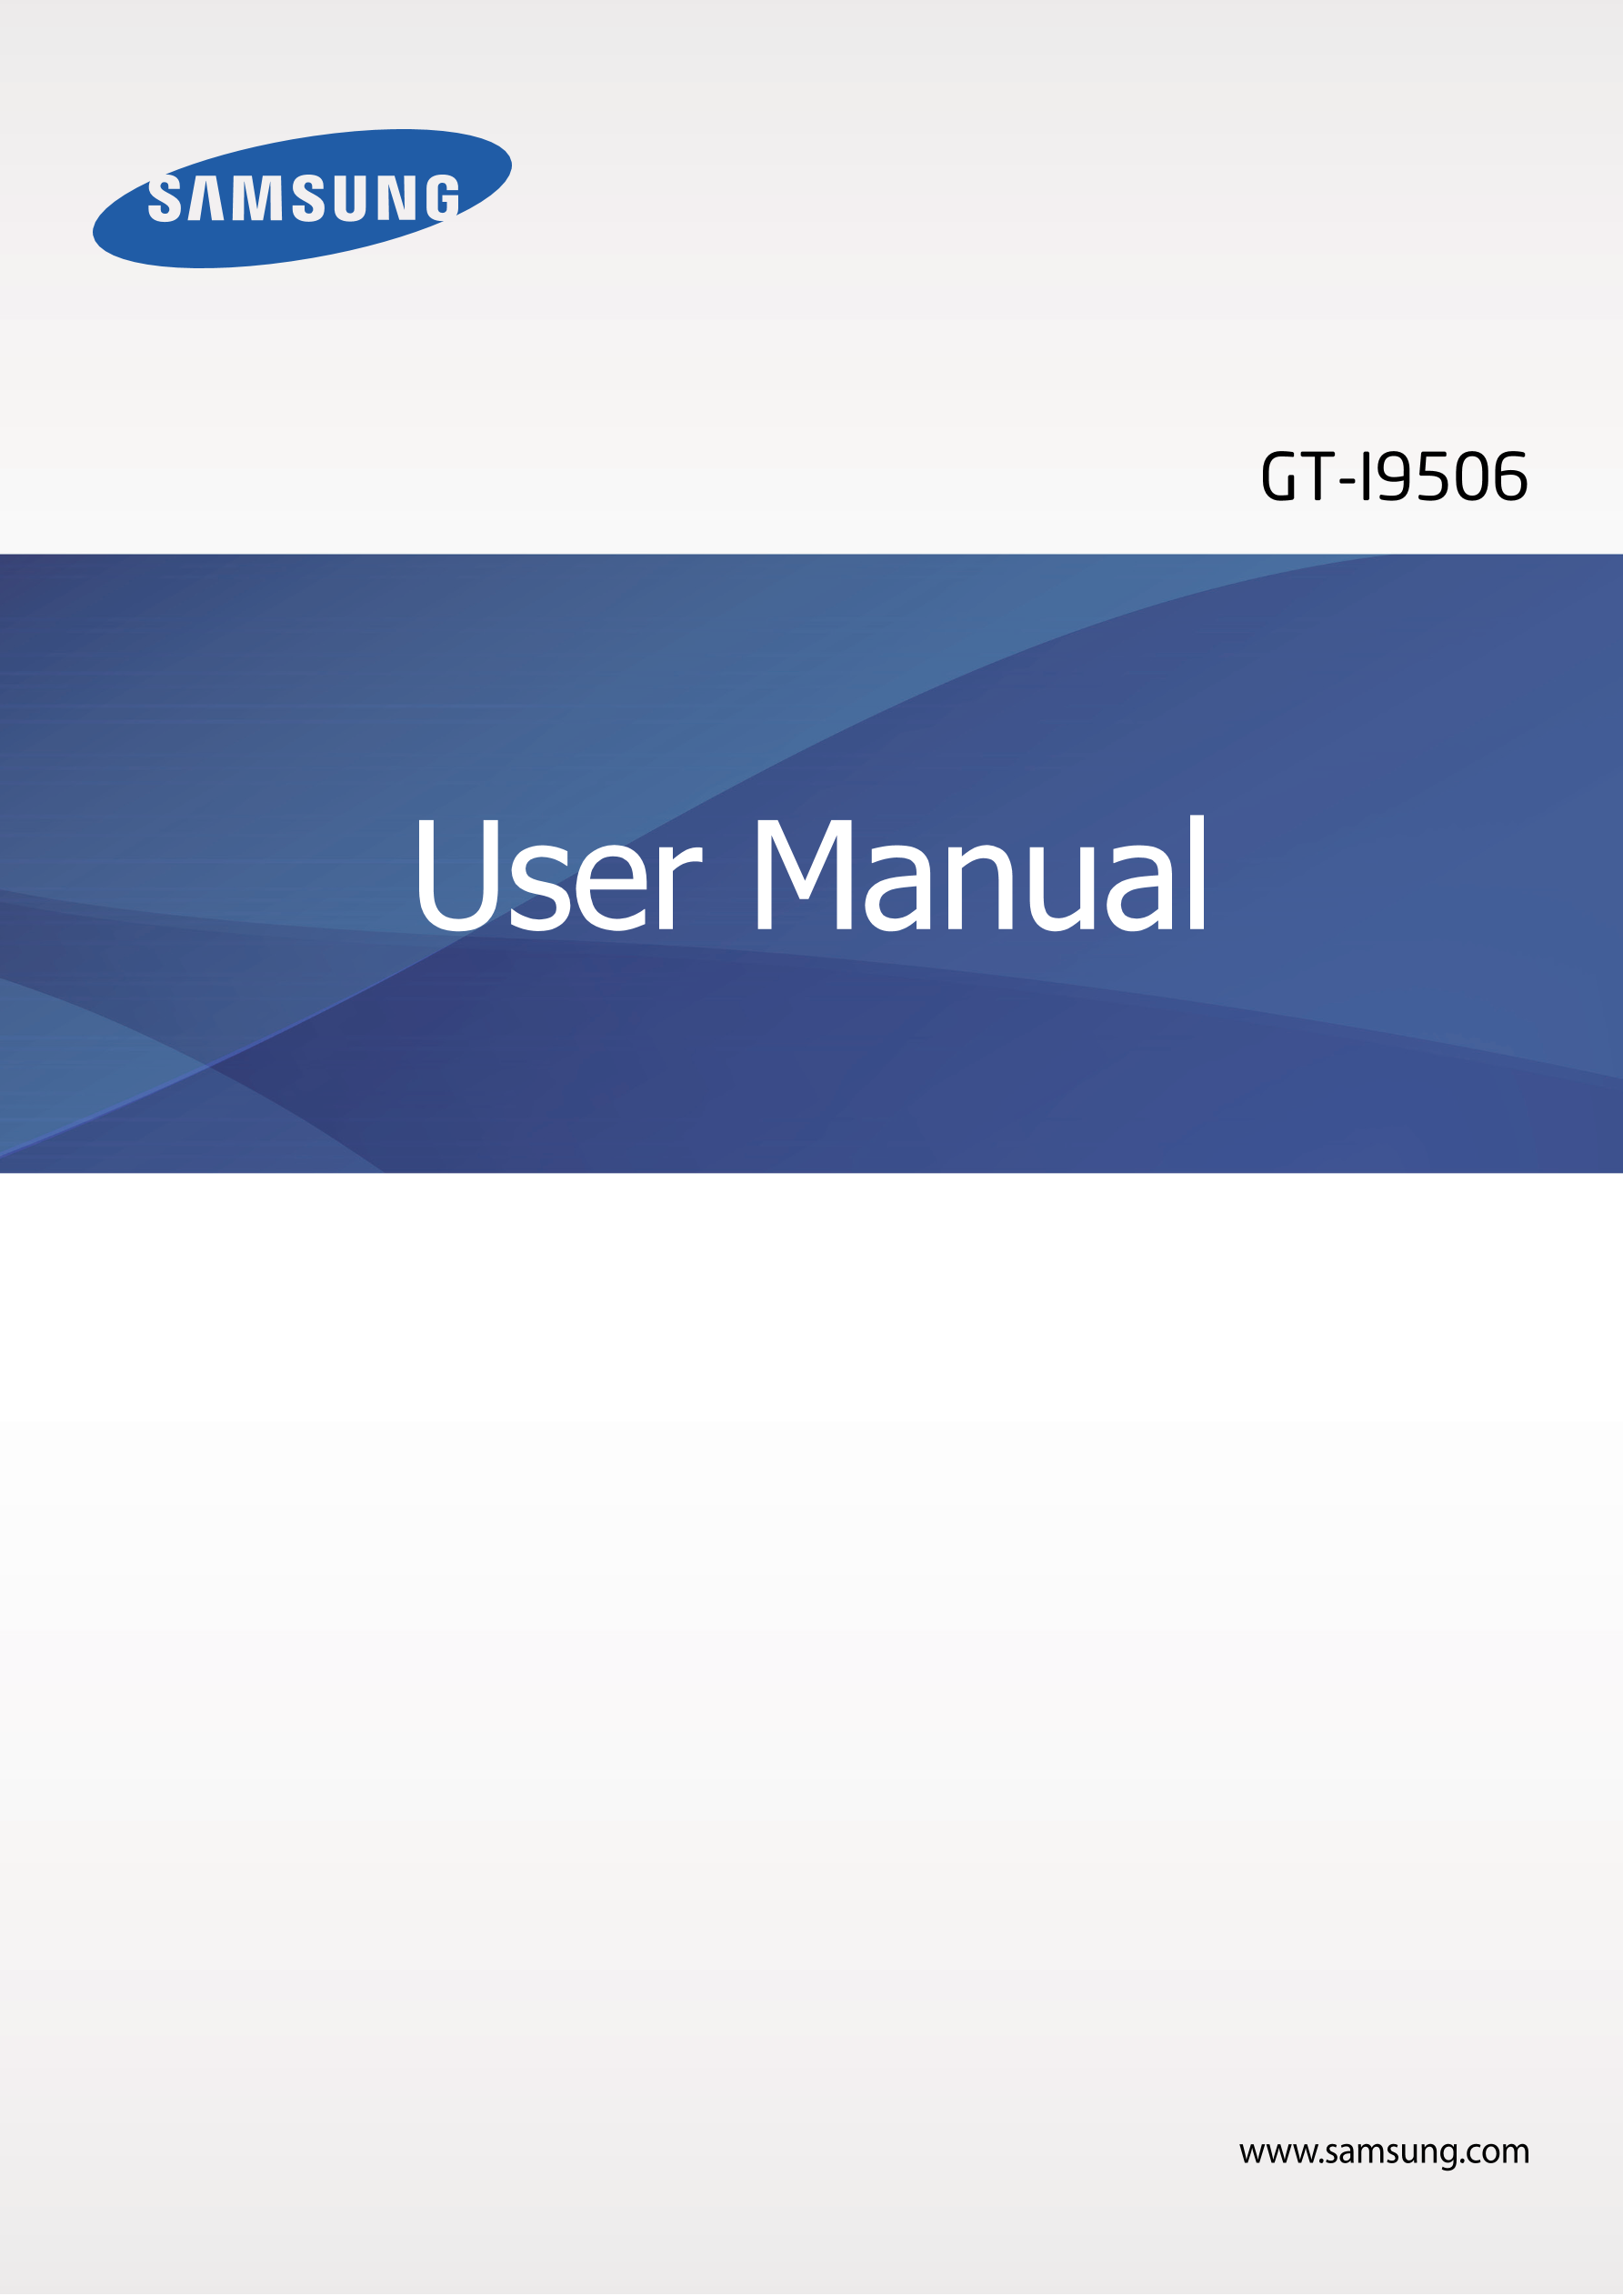 GT-I9506
User Manual
www.samsung.com